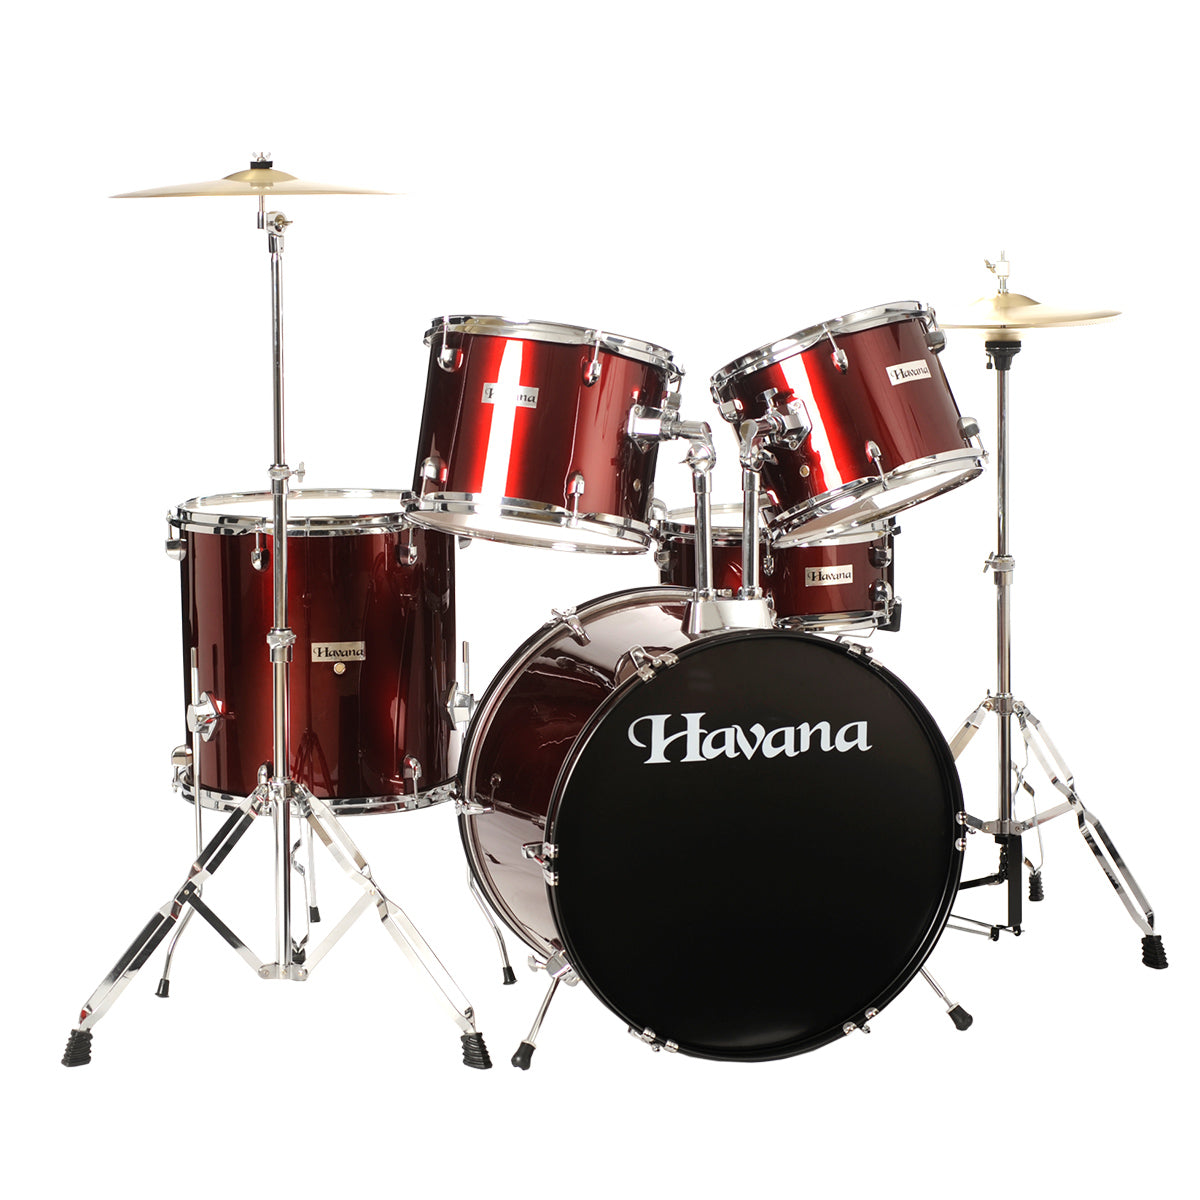 Havana HV 522 WR Acoustic Drum (full kit) 5PCs set including Hardware